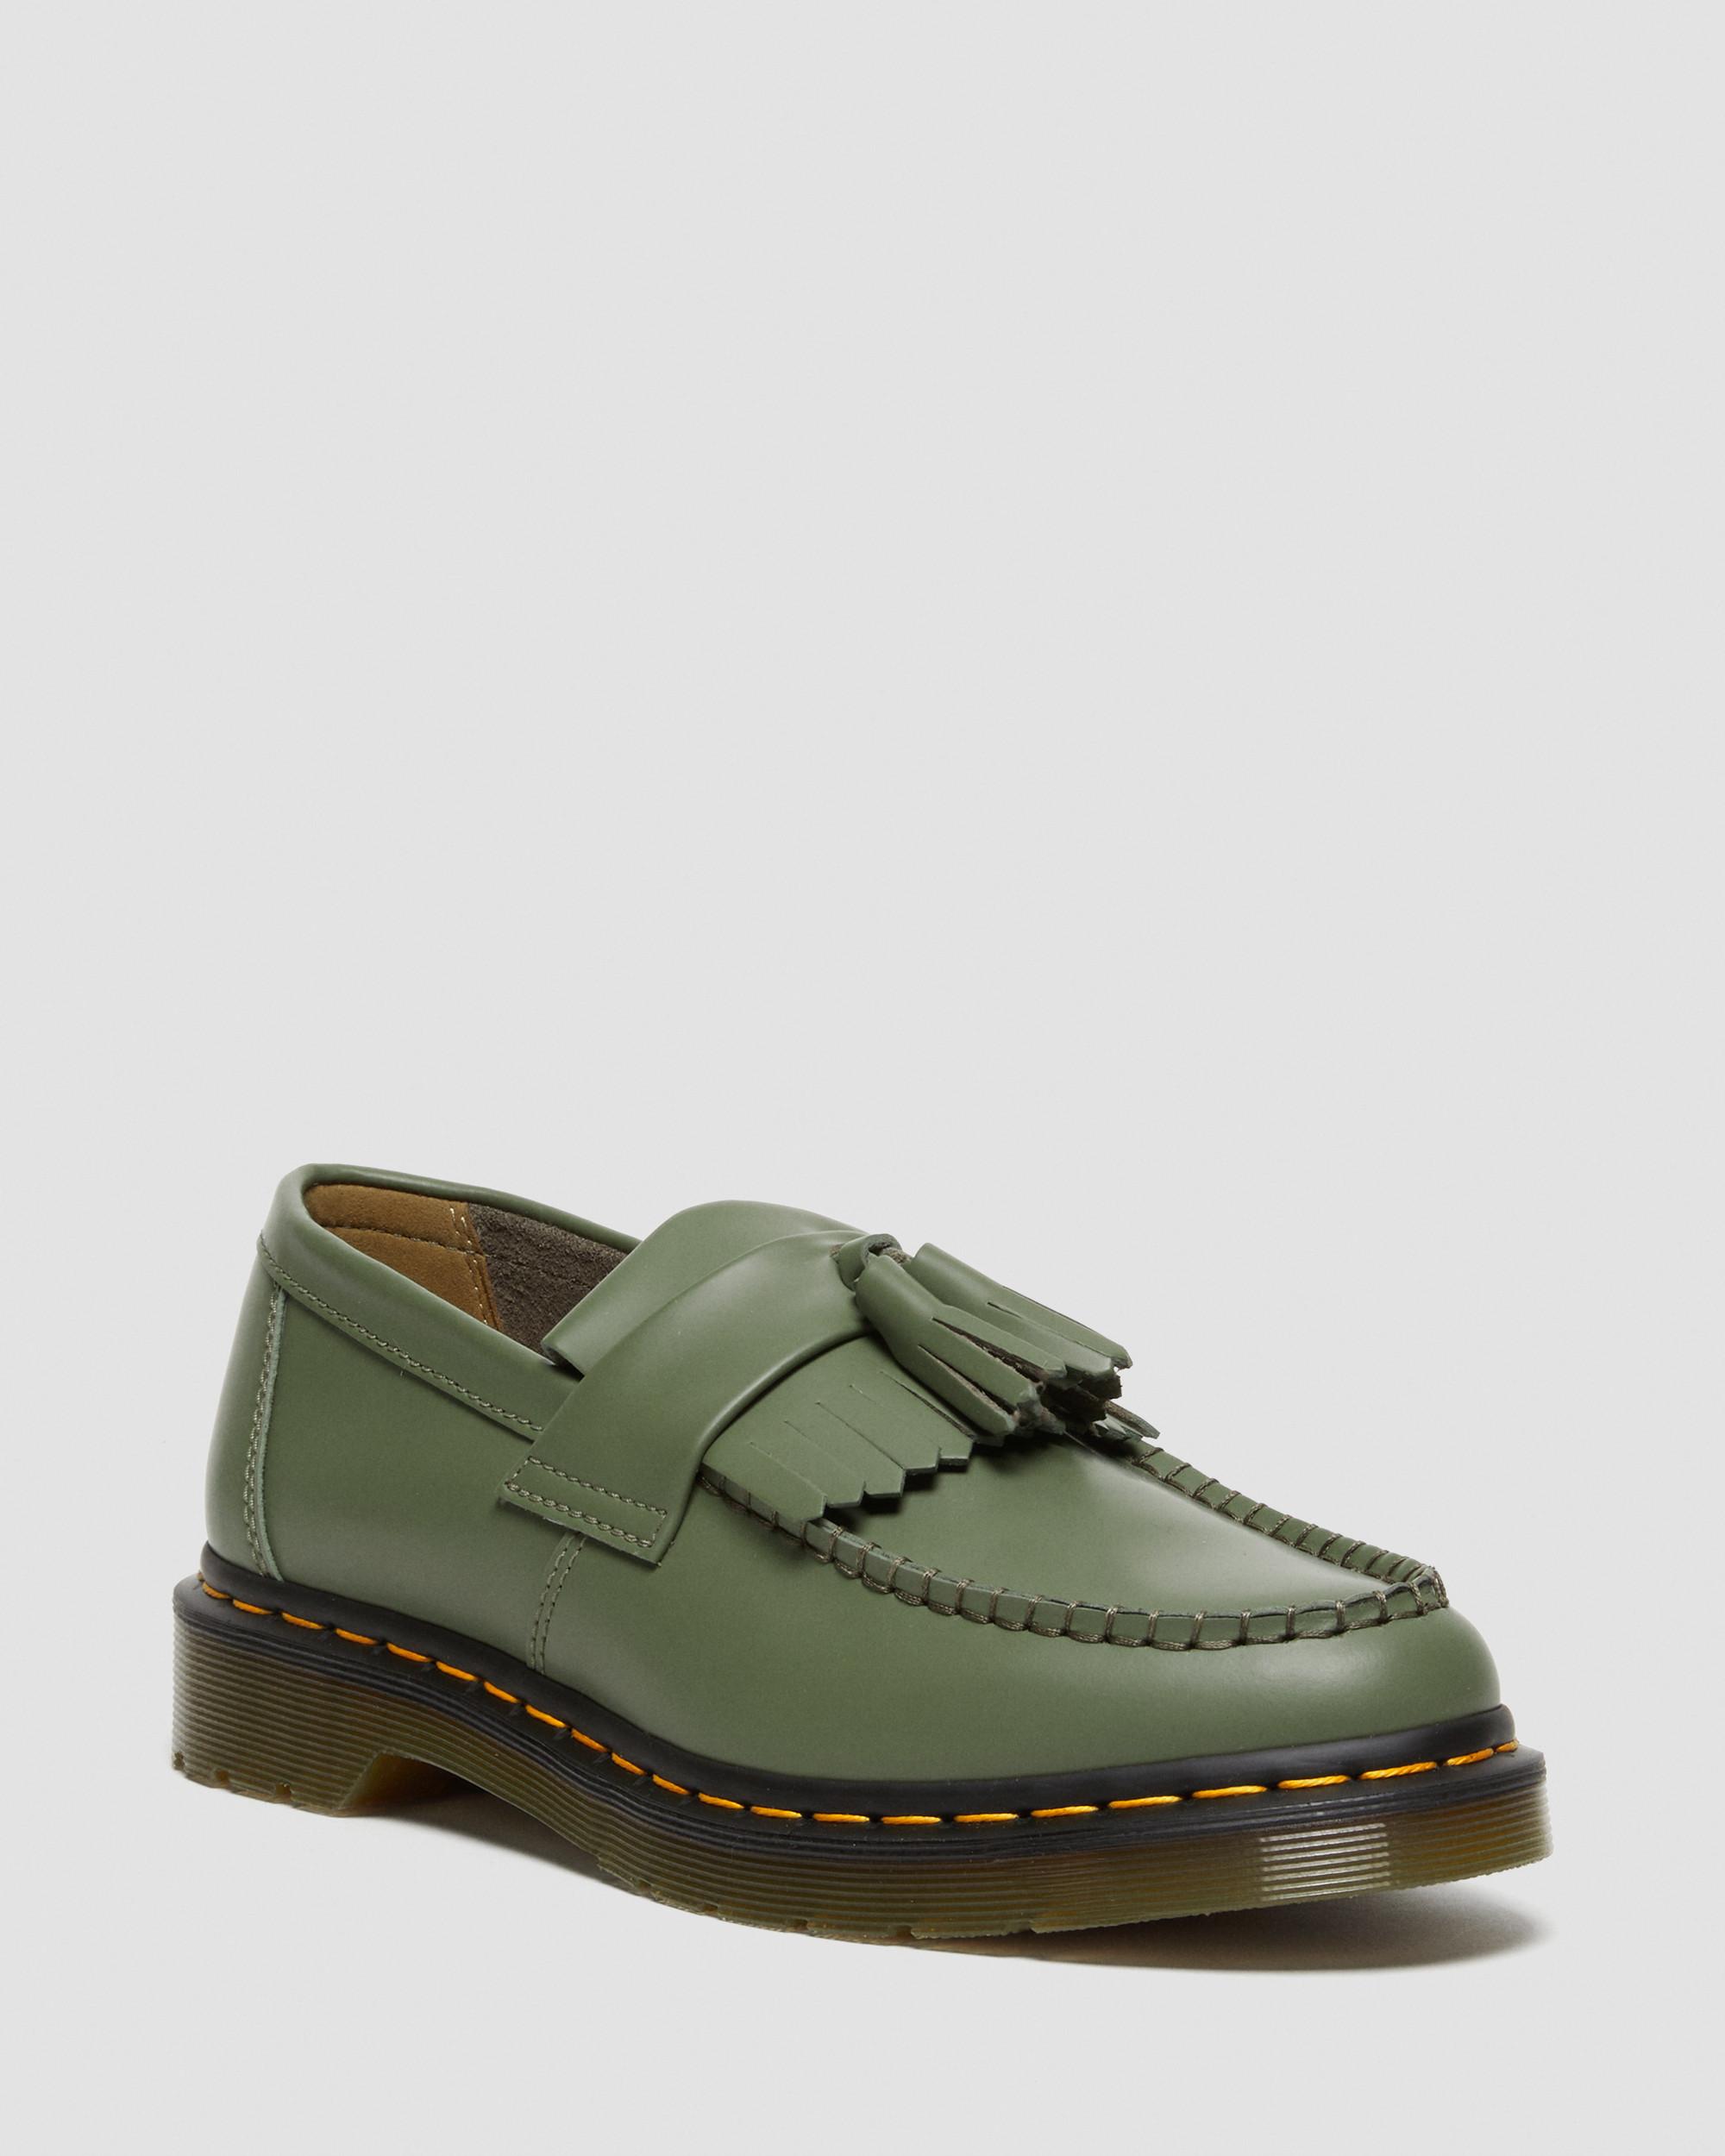 Adrian Yellow Stitch Leather Tassel Loafers, Khaki Green | Dr. Martens